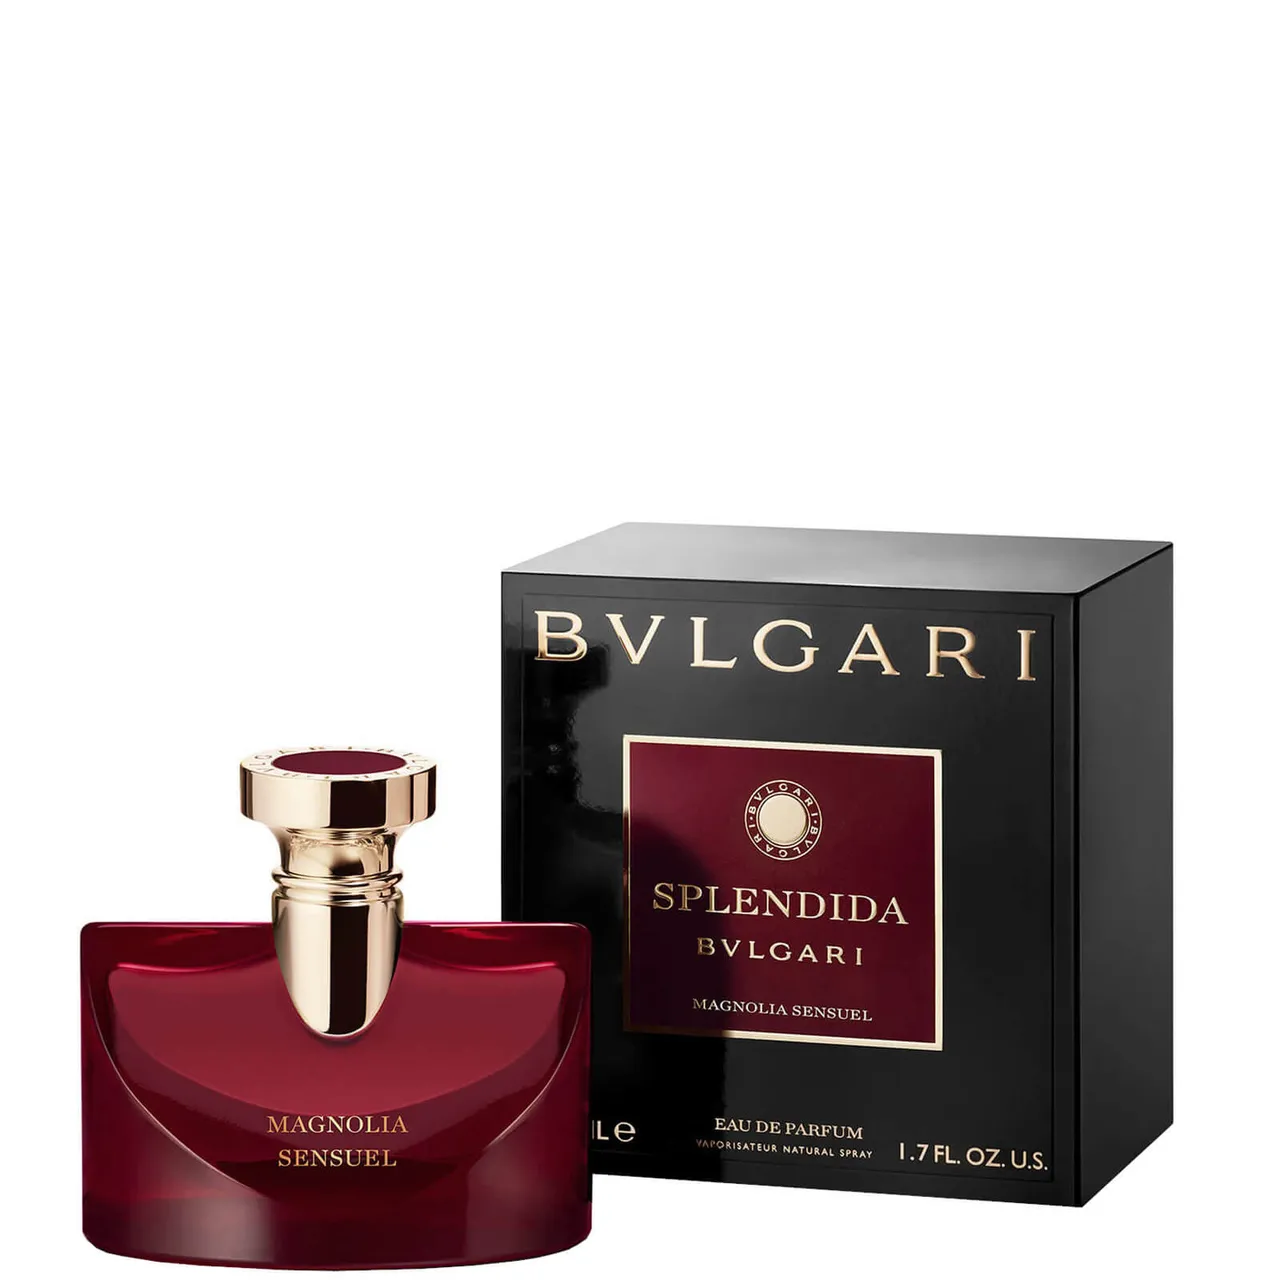 BVLGARI Splendida Magnolia Sensuel Eau De Parfum 50ml